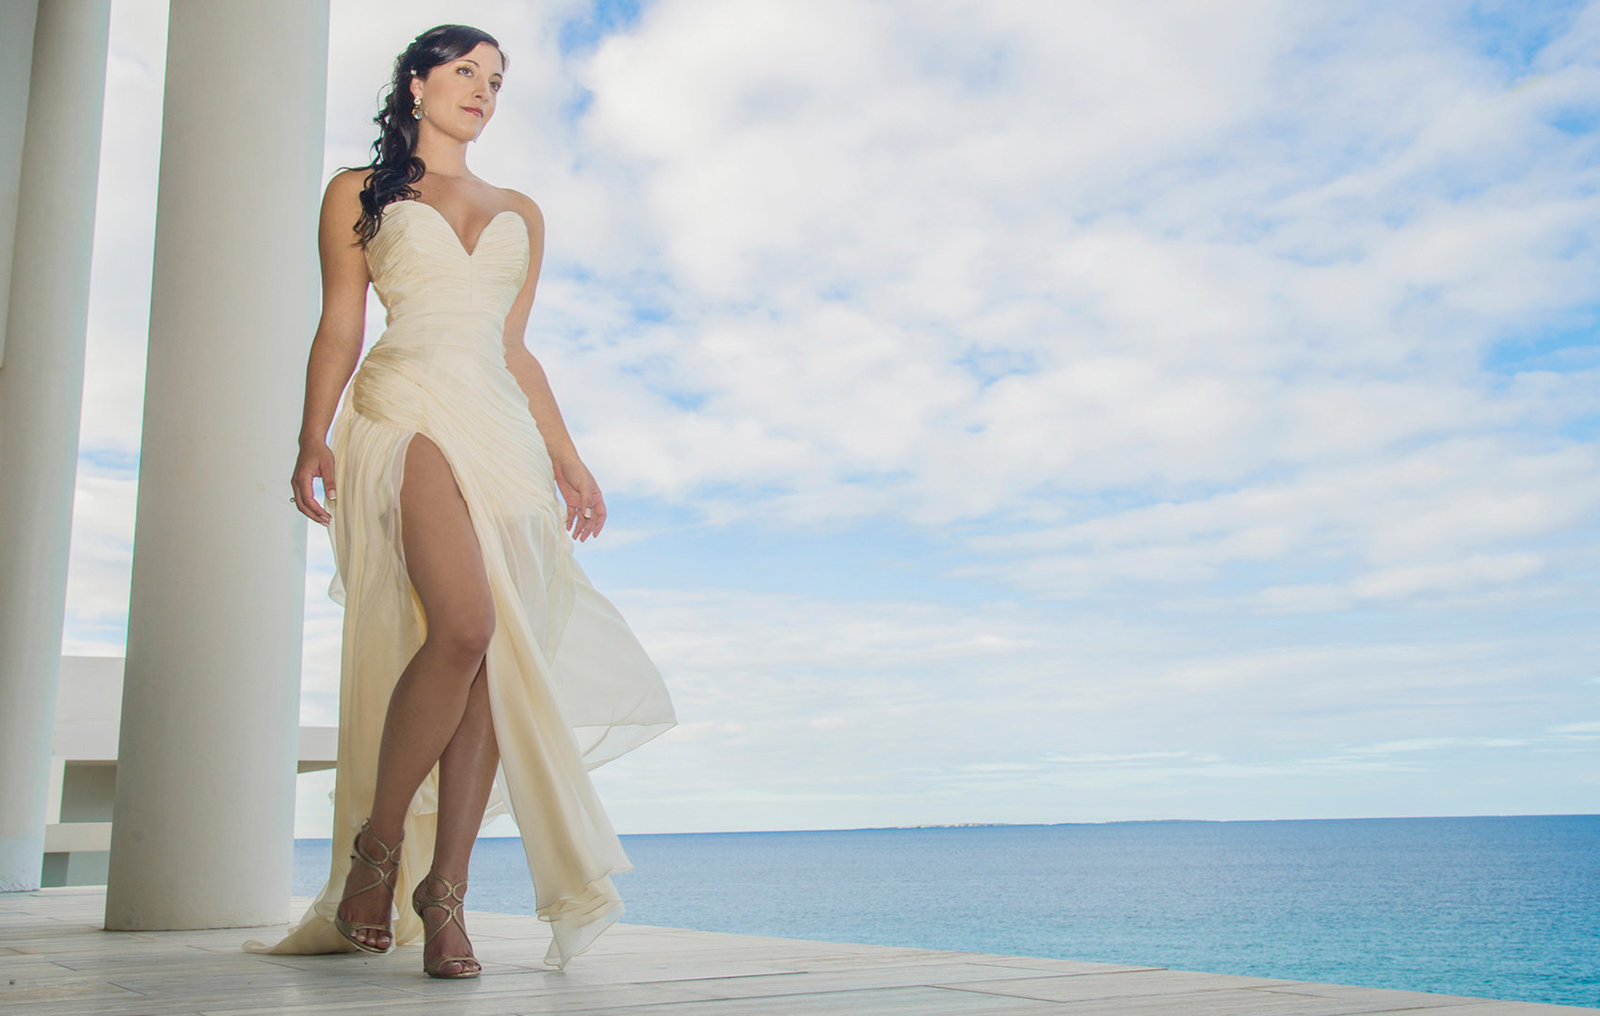 Wedding photographers on Maui | Maui wedding photography